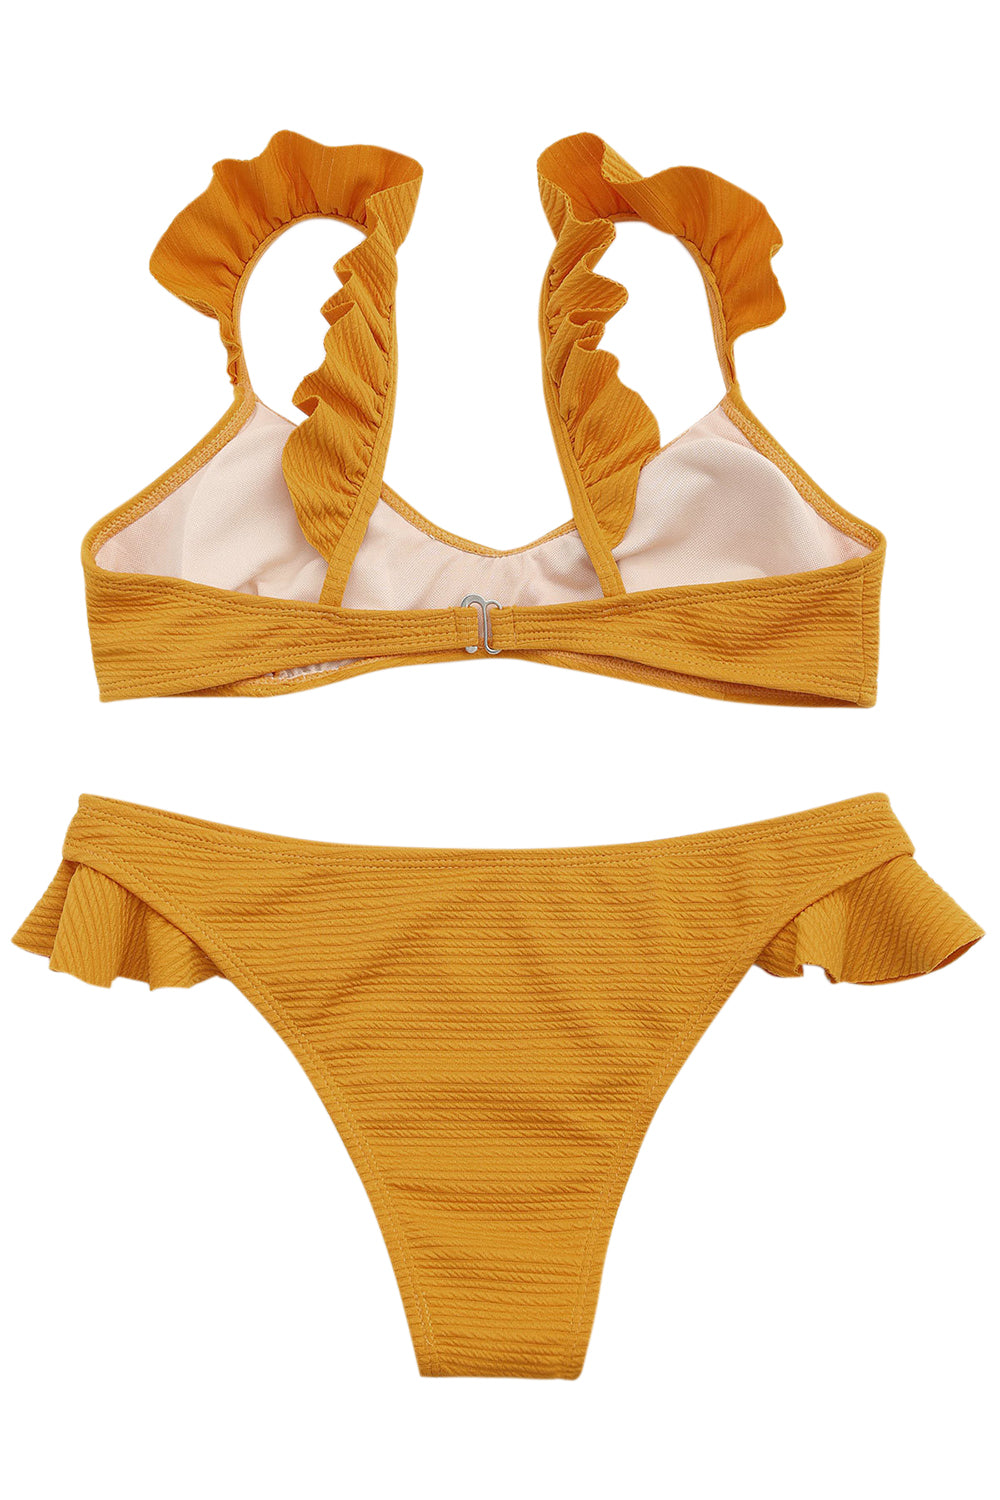 Iyasson Cute Solid-color Falbala Bikini Sets